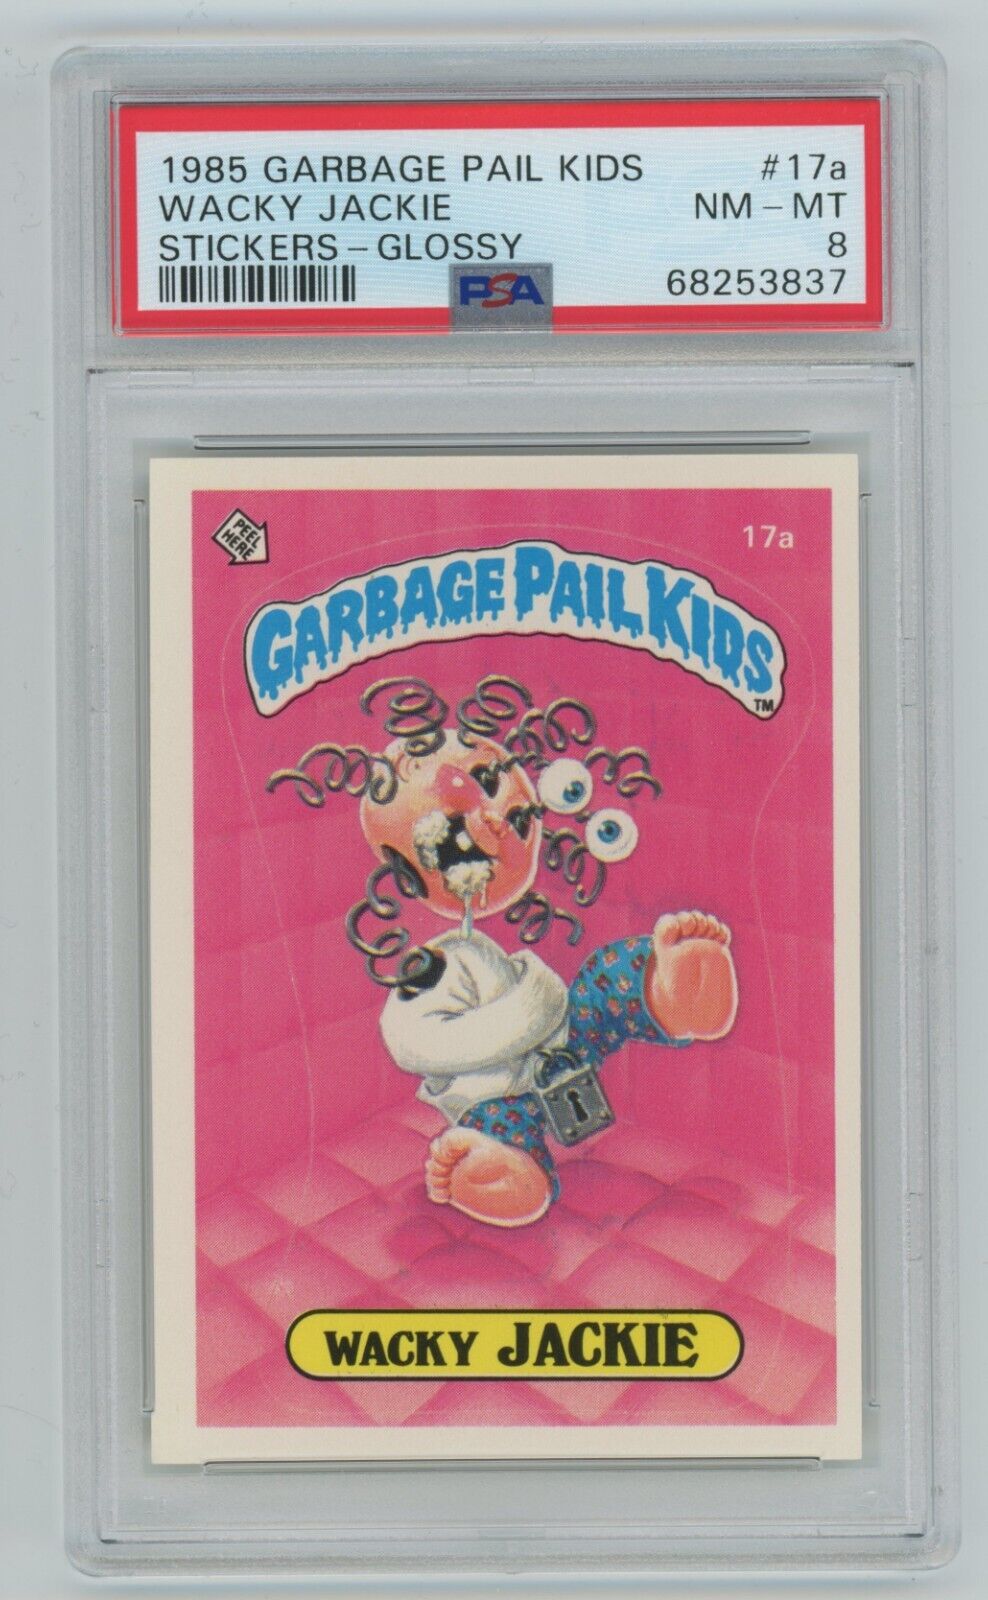 1985 Topps Garbage Pail Kids OS1 Series 1 WACKY JACKIE 17a GLOSSY Card PSA 8 GPK